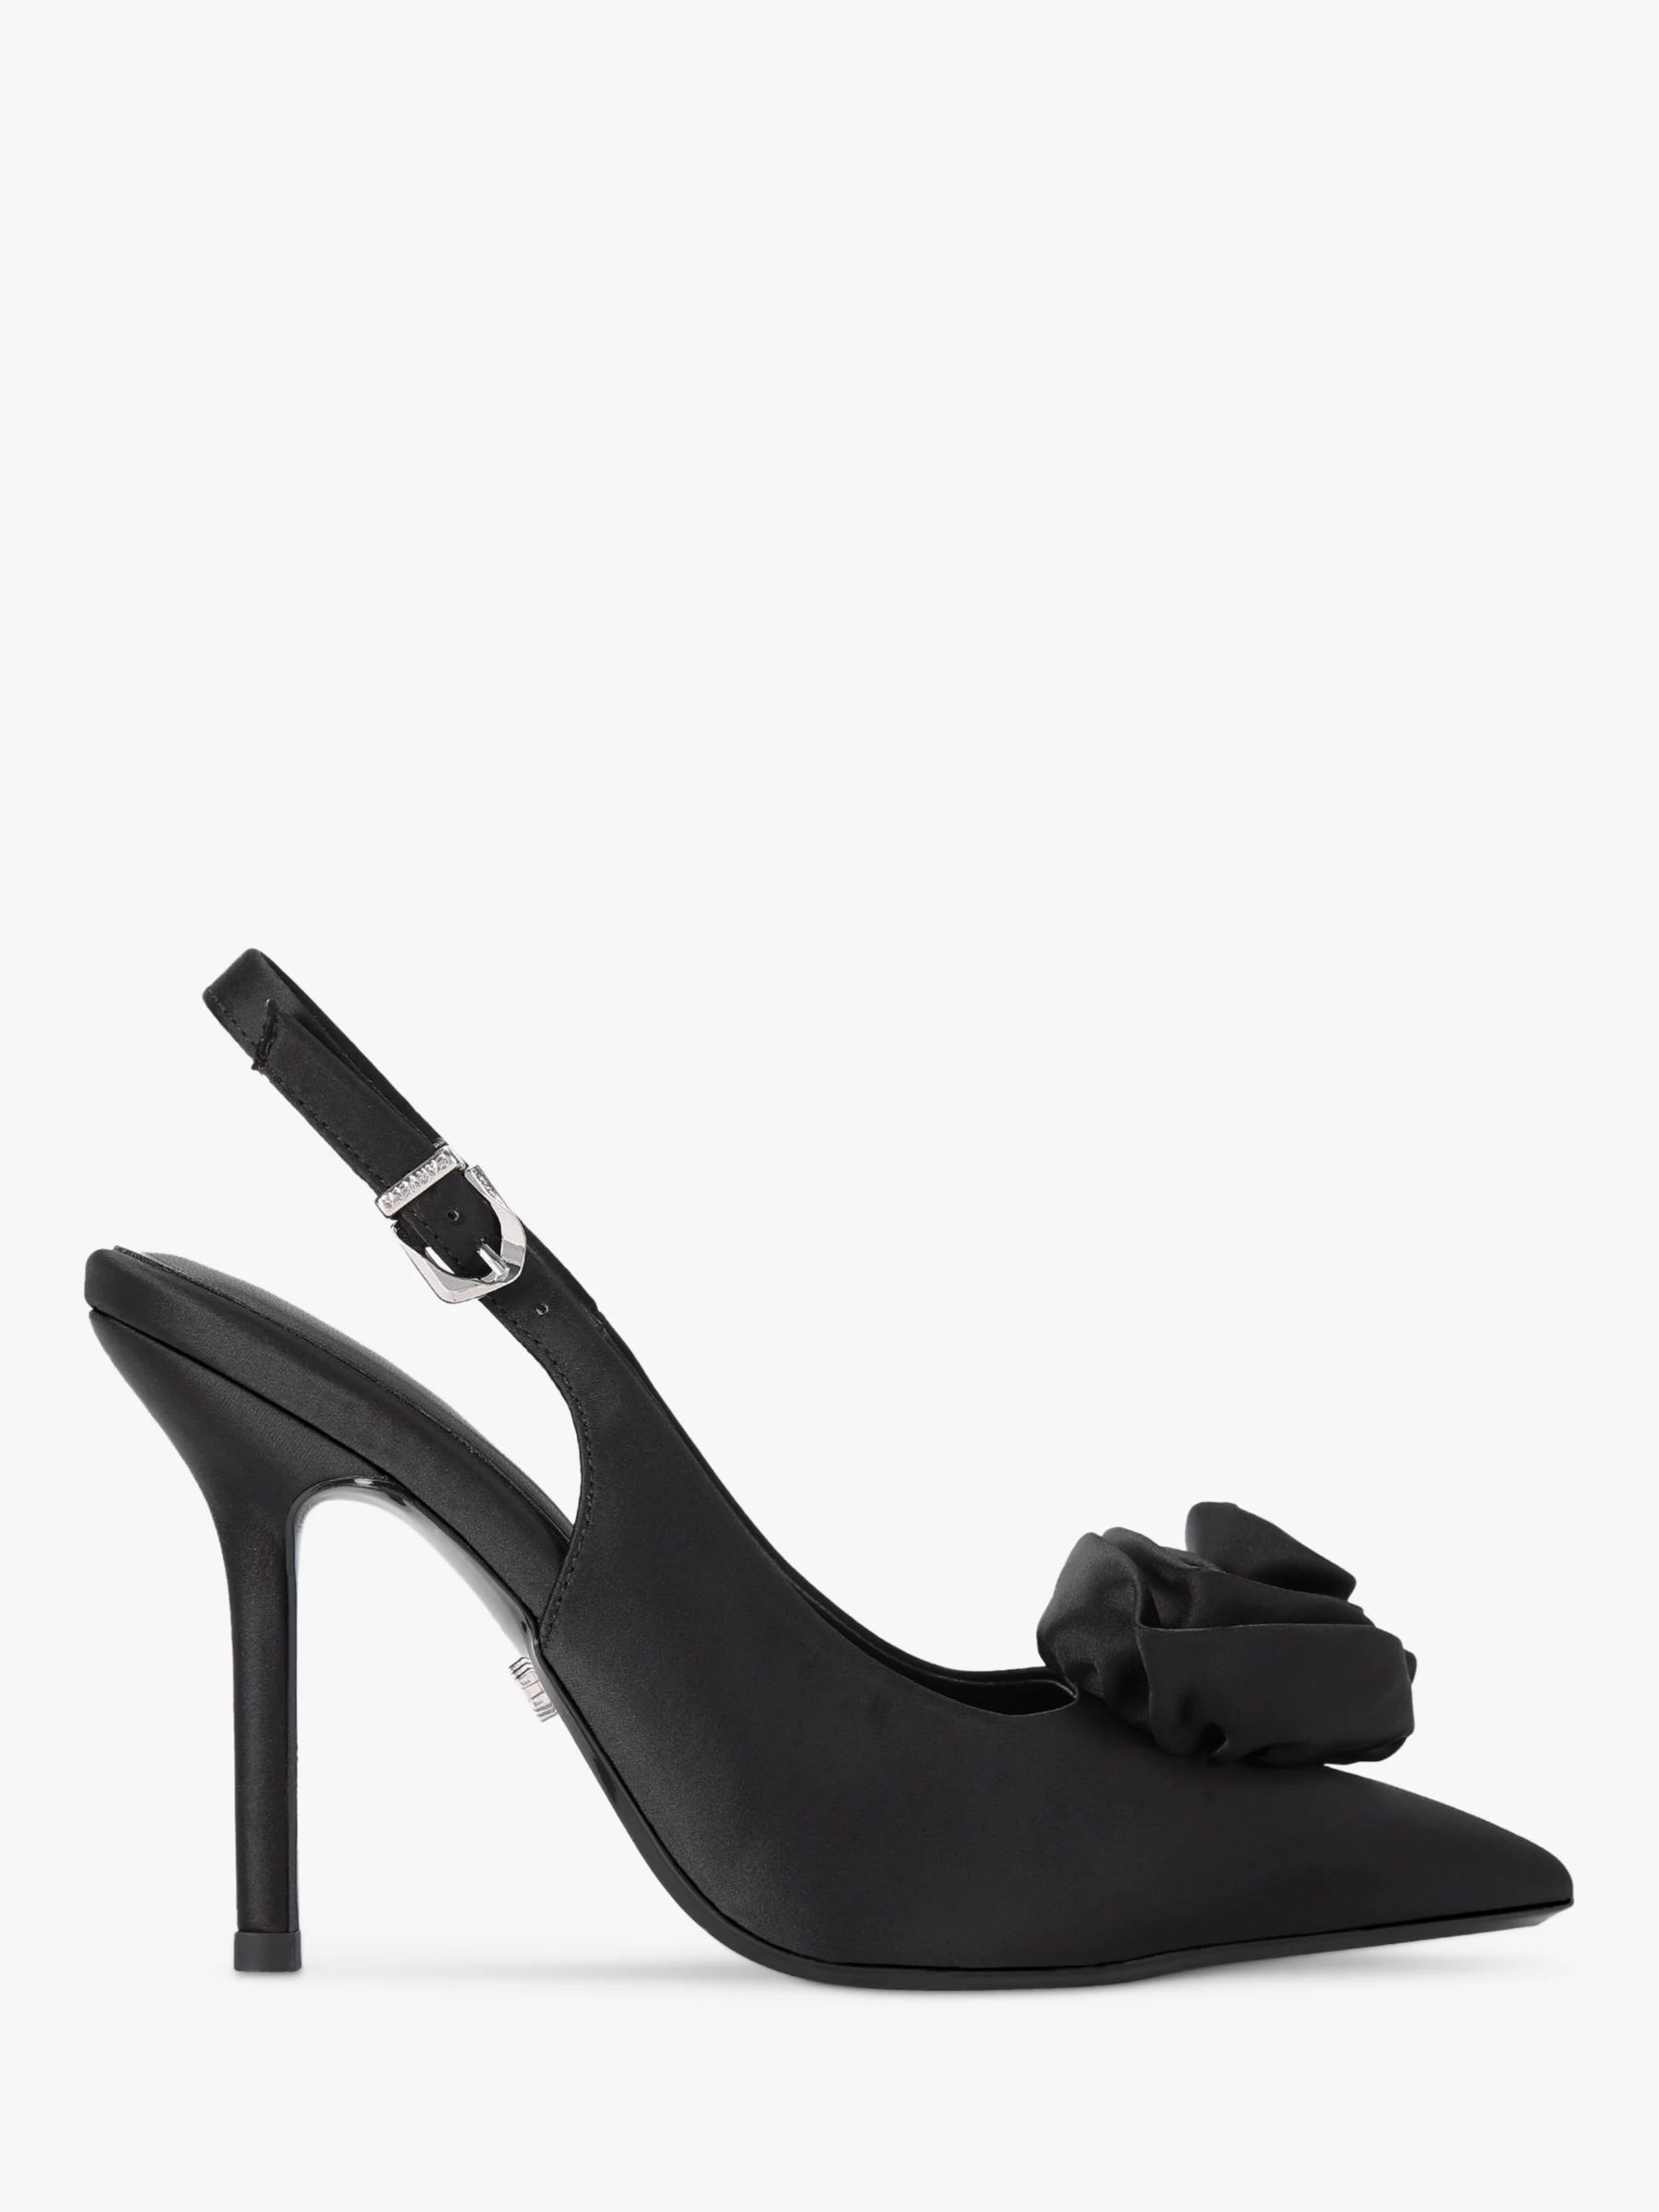 Carvela Corsage Satin Slingback Court Shoes, Black | John Lewis (UK)